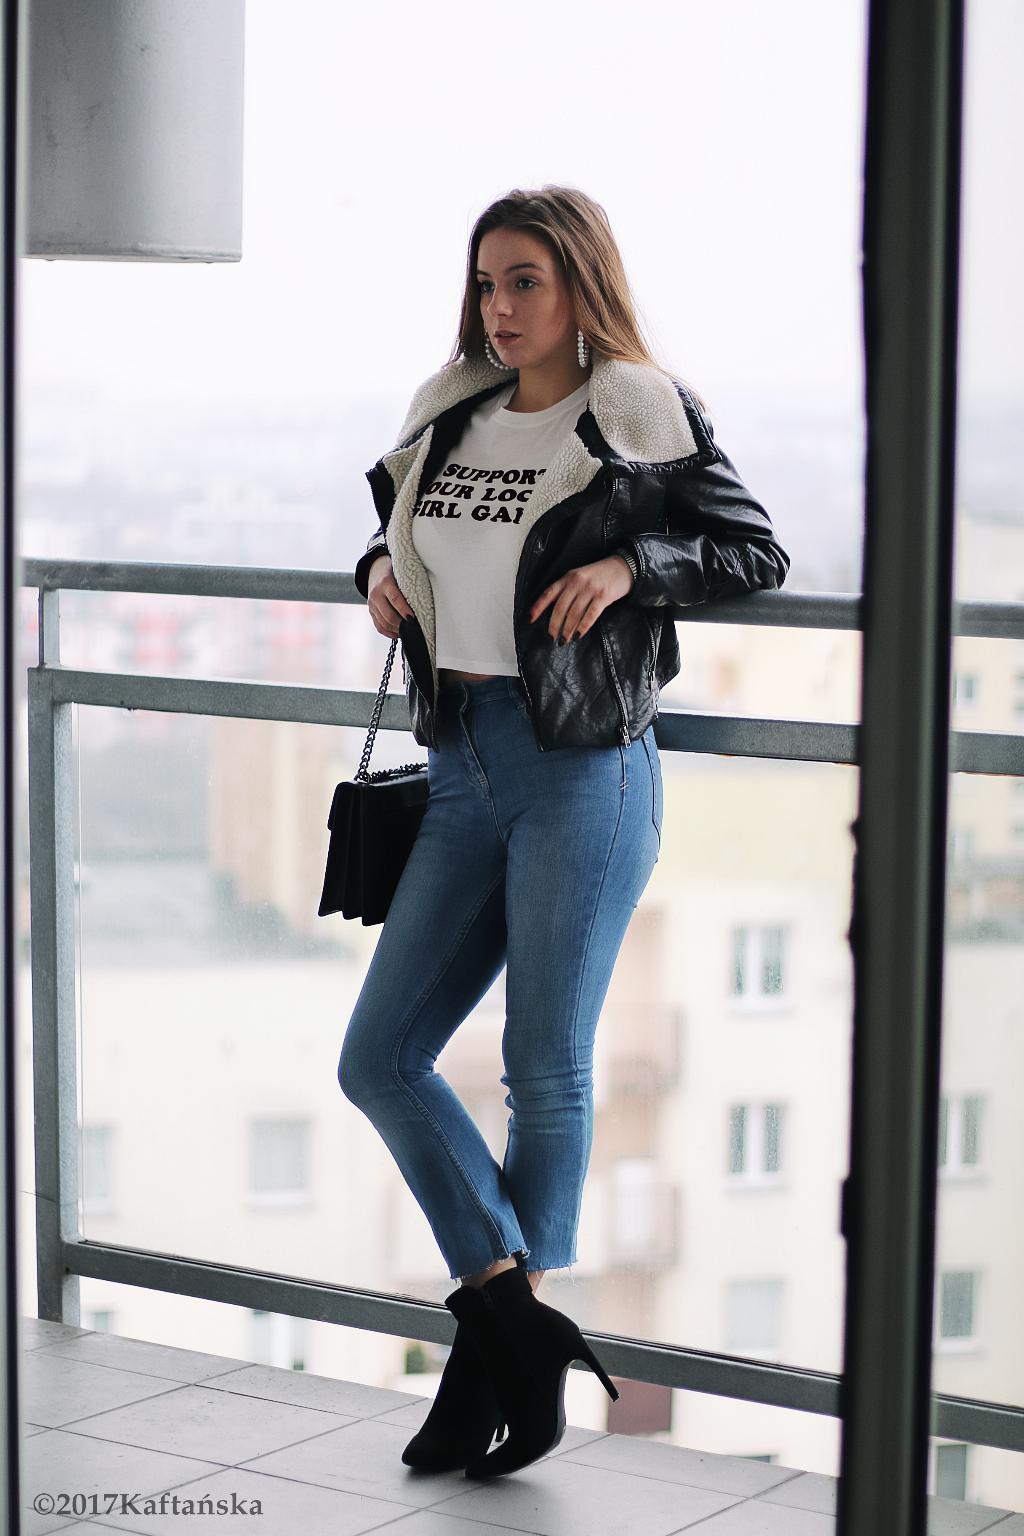 Buty DeeZee, T-shirt Local Girl Gang — Joannavi